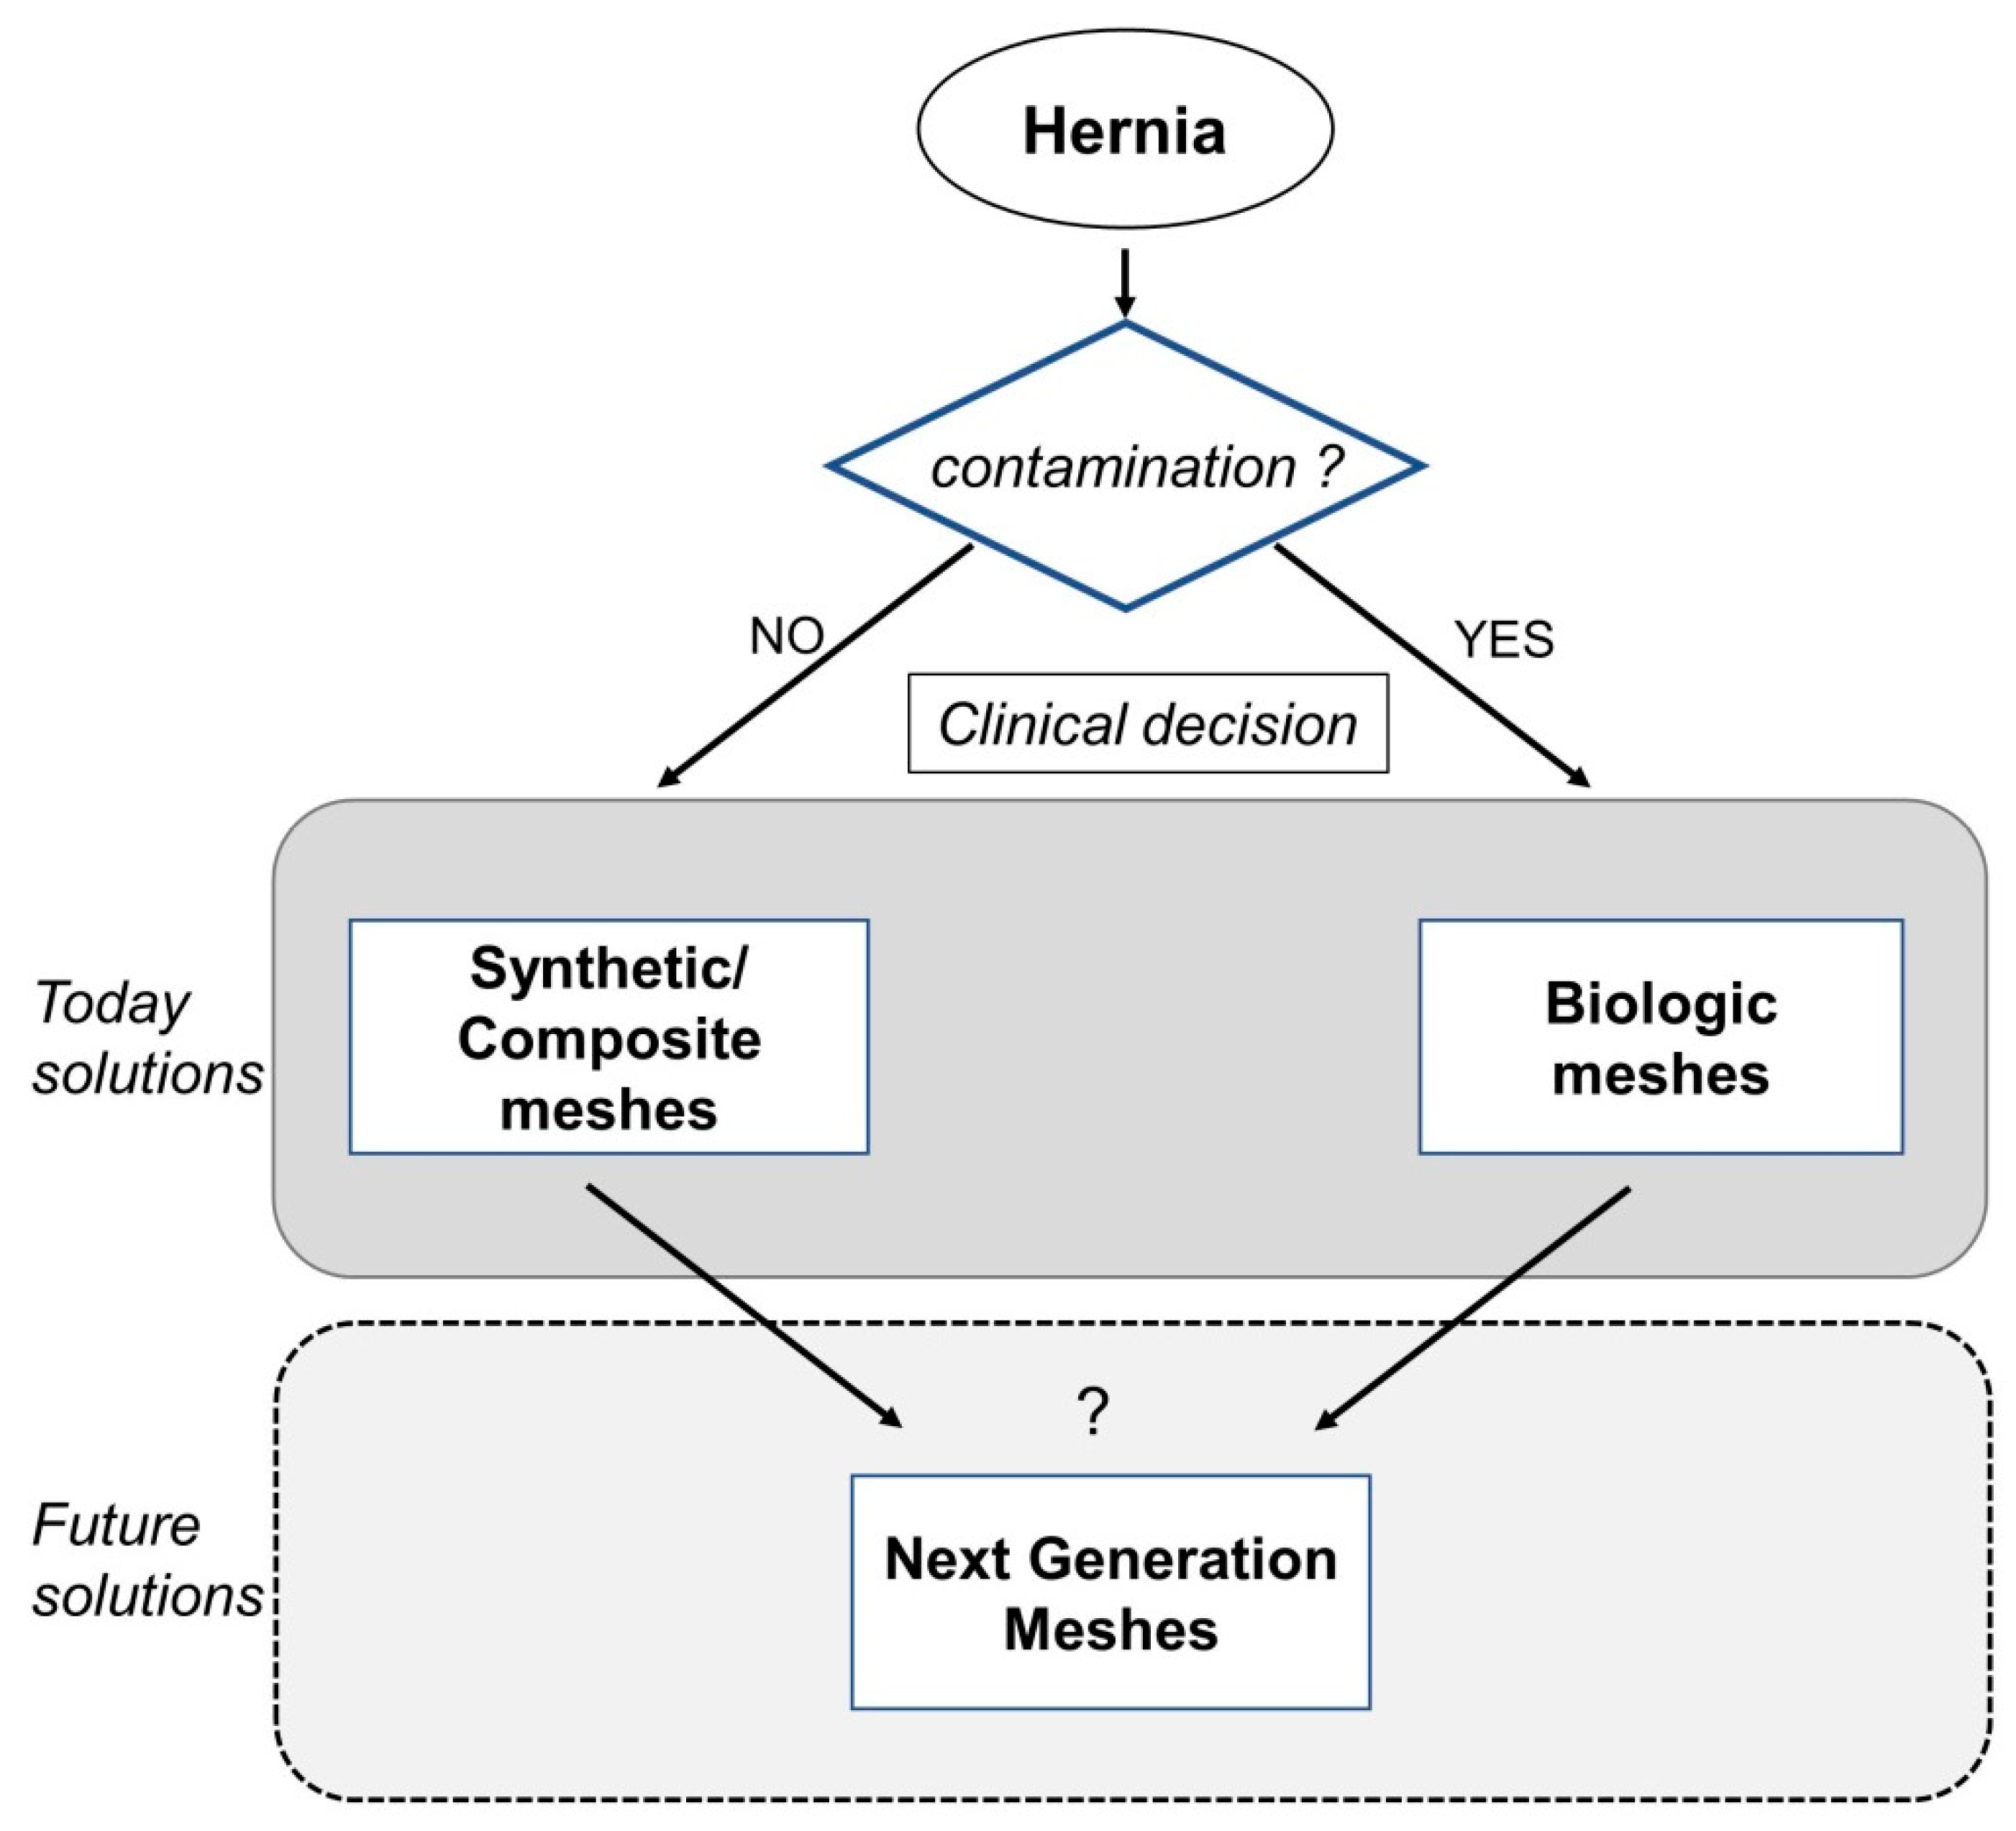 Hernia Recovery Chart